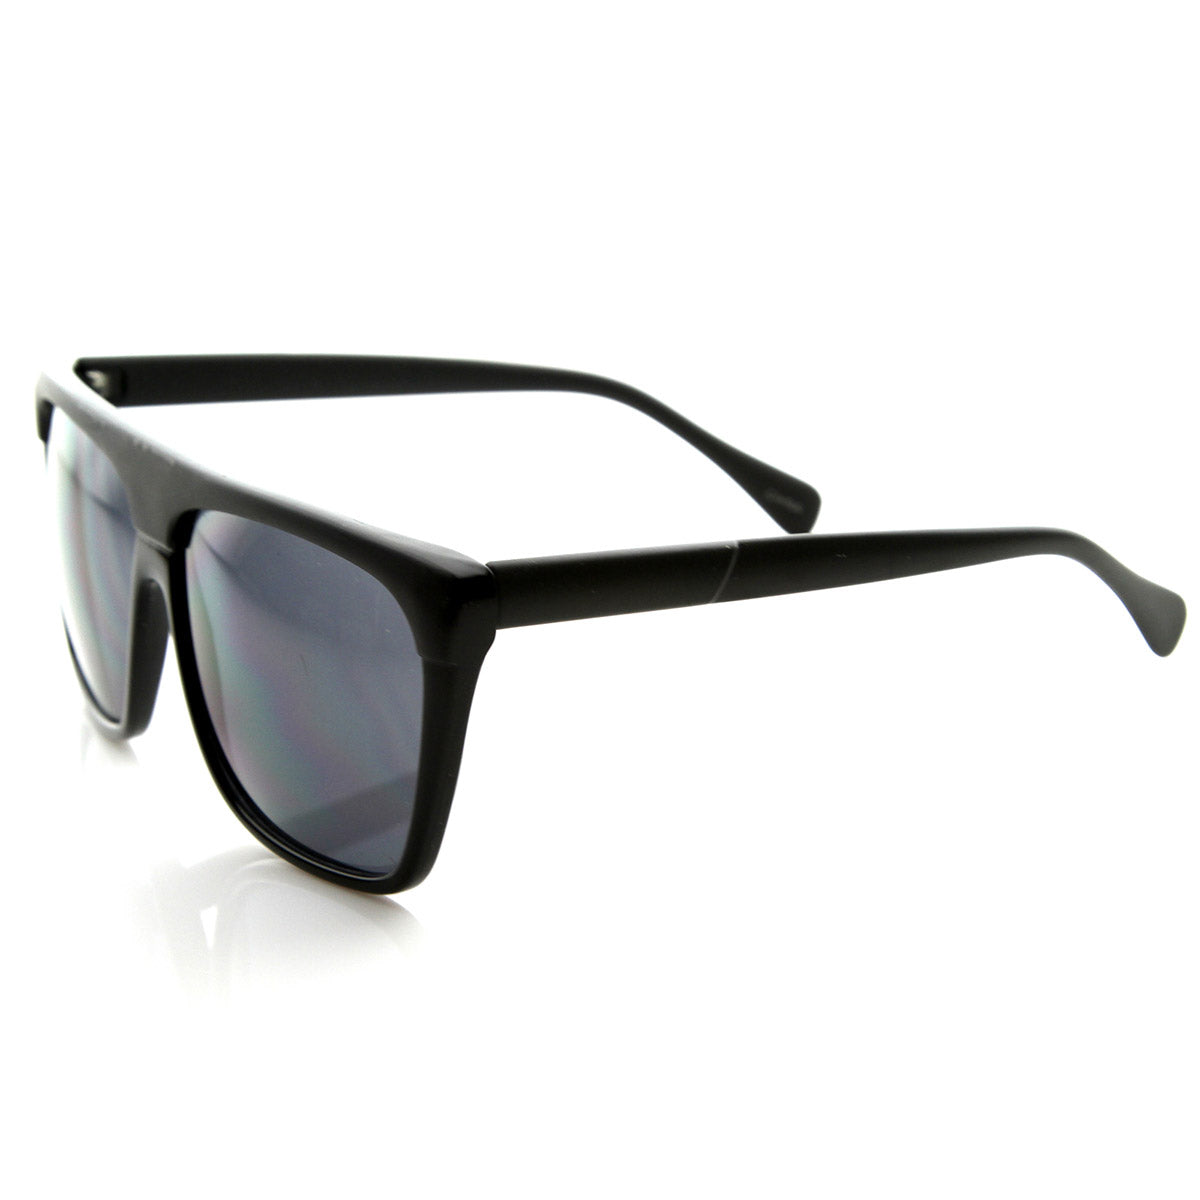 Classic Retro Fashion Large Square Flat Top Aviator Sunglasses ...